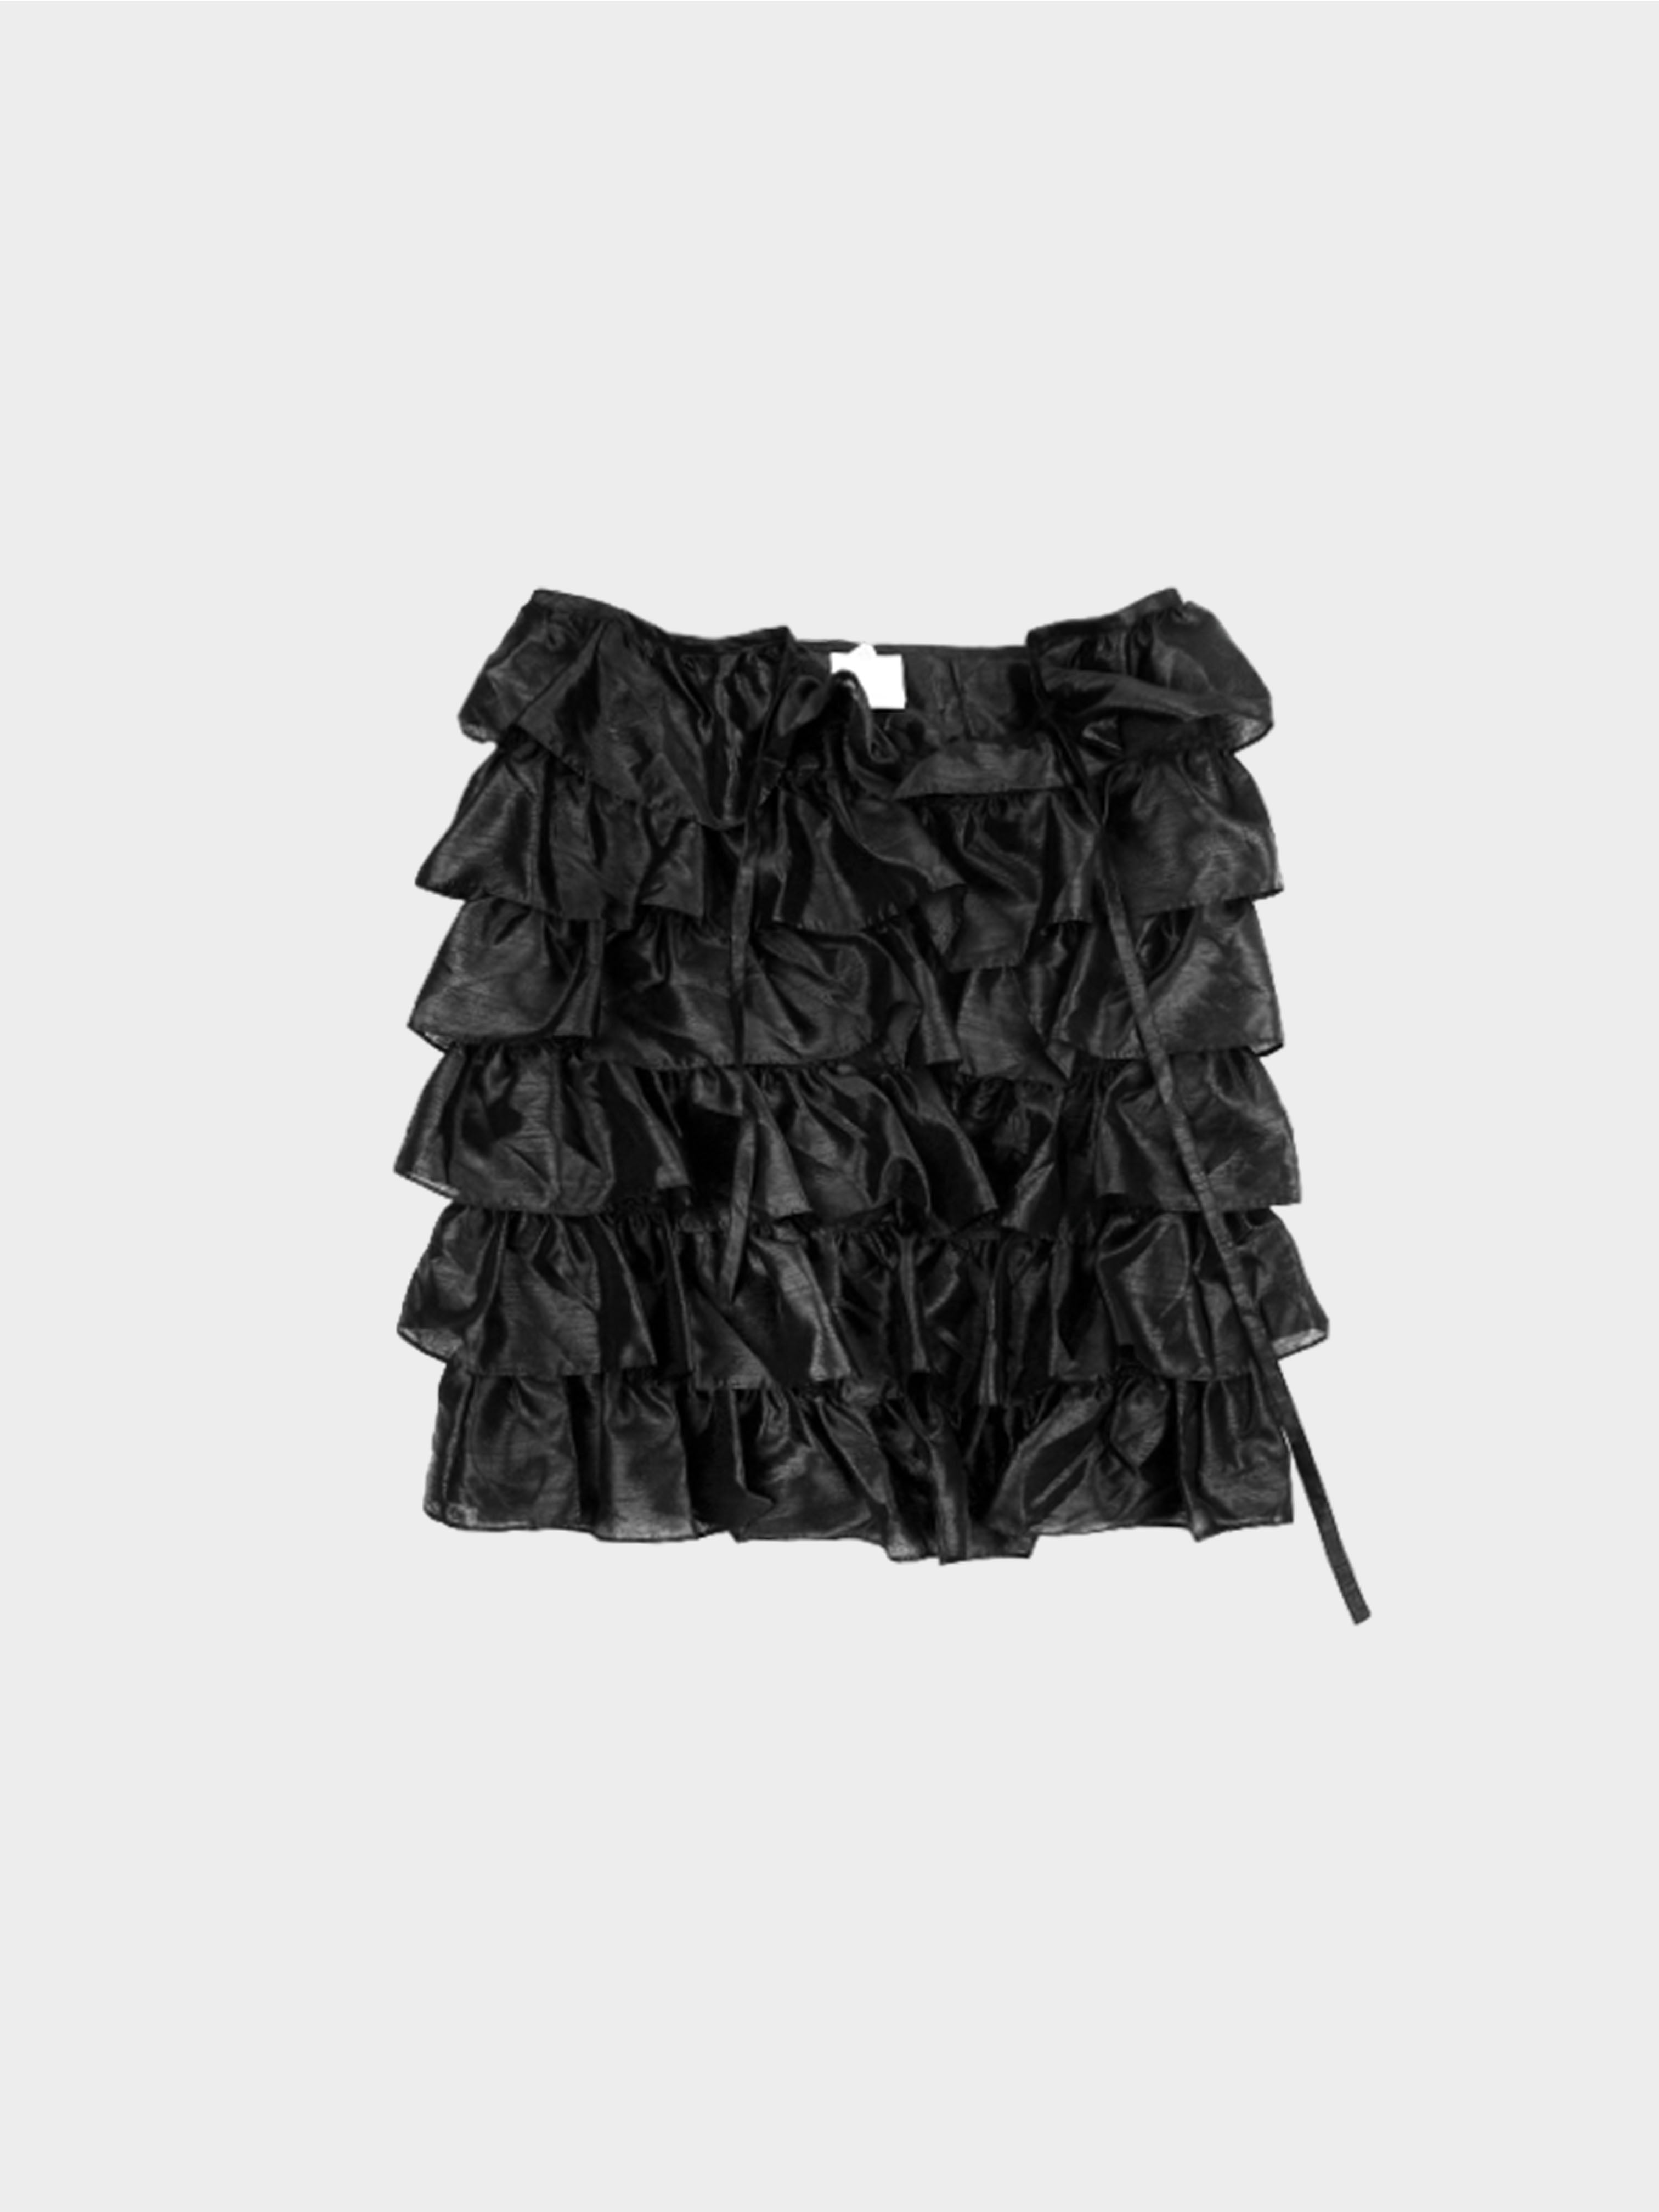 Comme des Garçons FW 2001 Robed Chambre Black Half Wrap Ruffled Skirt